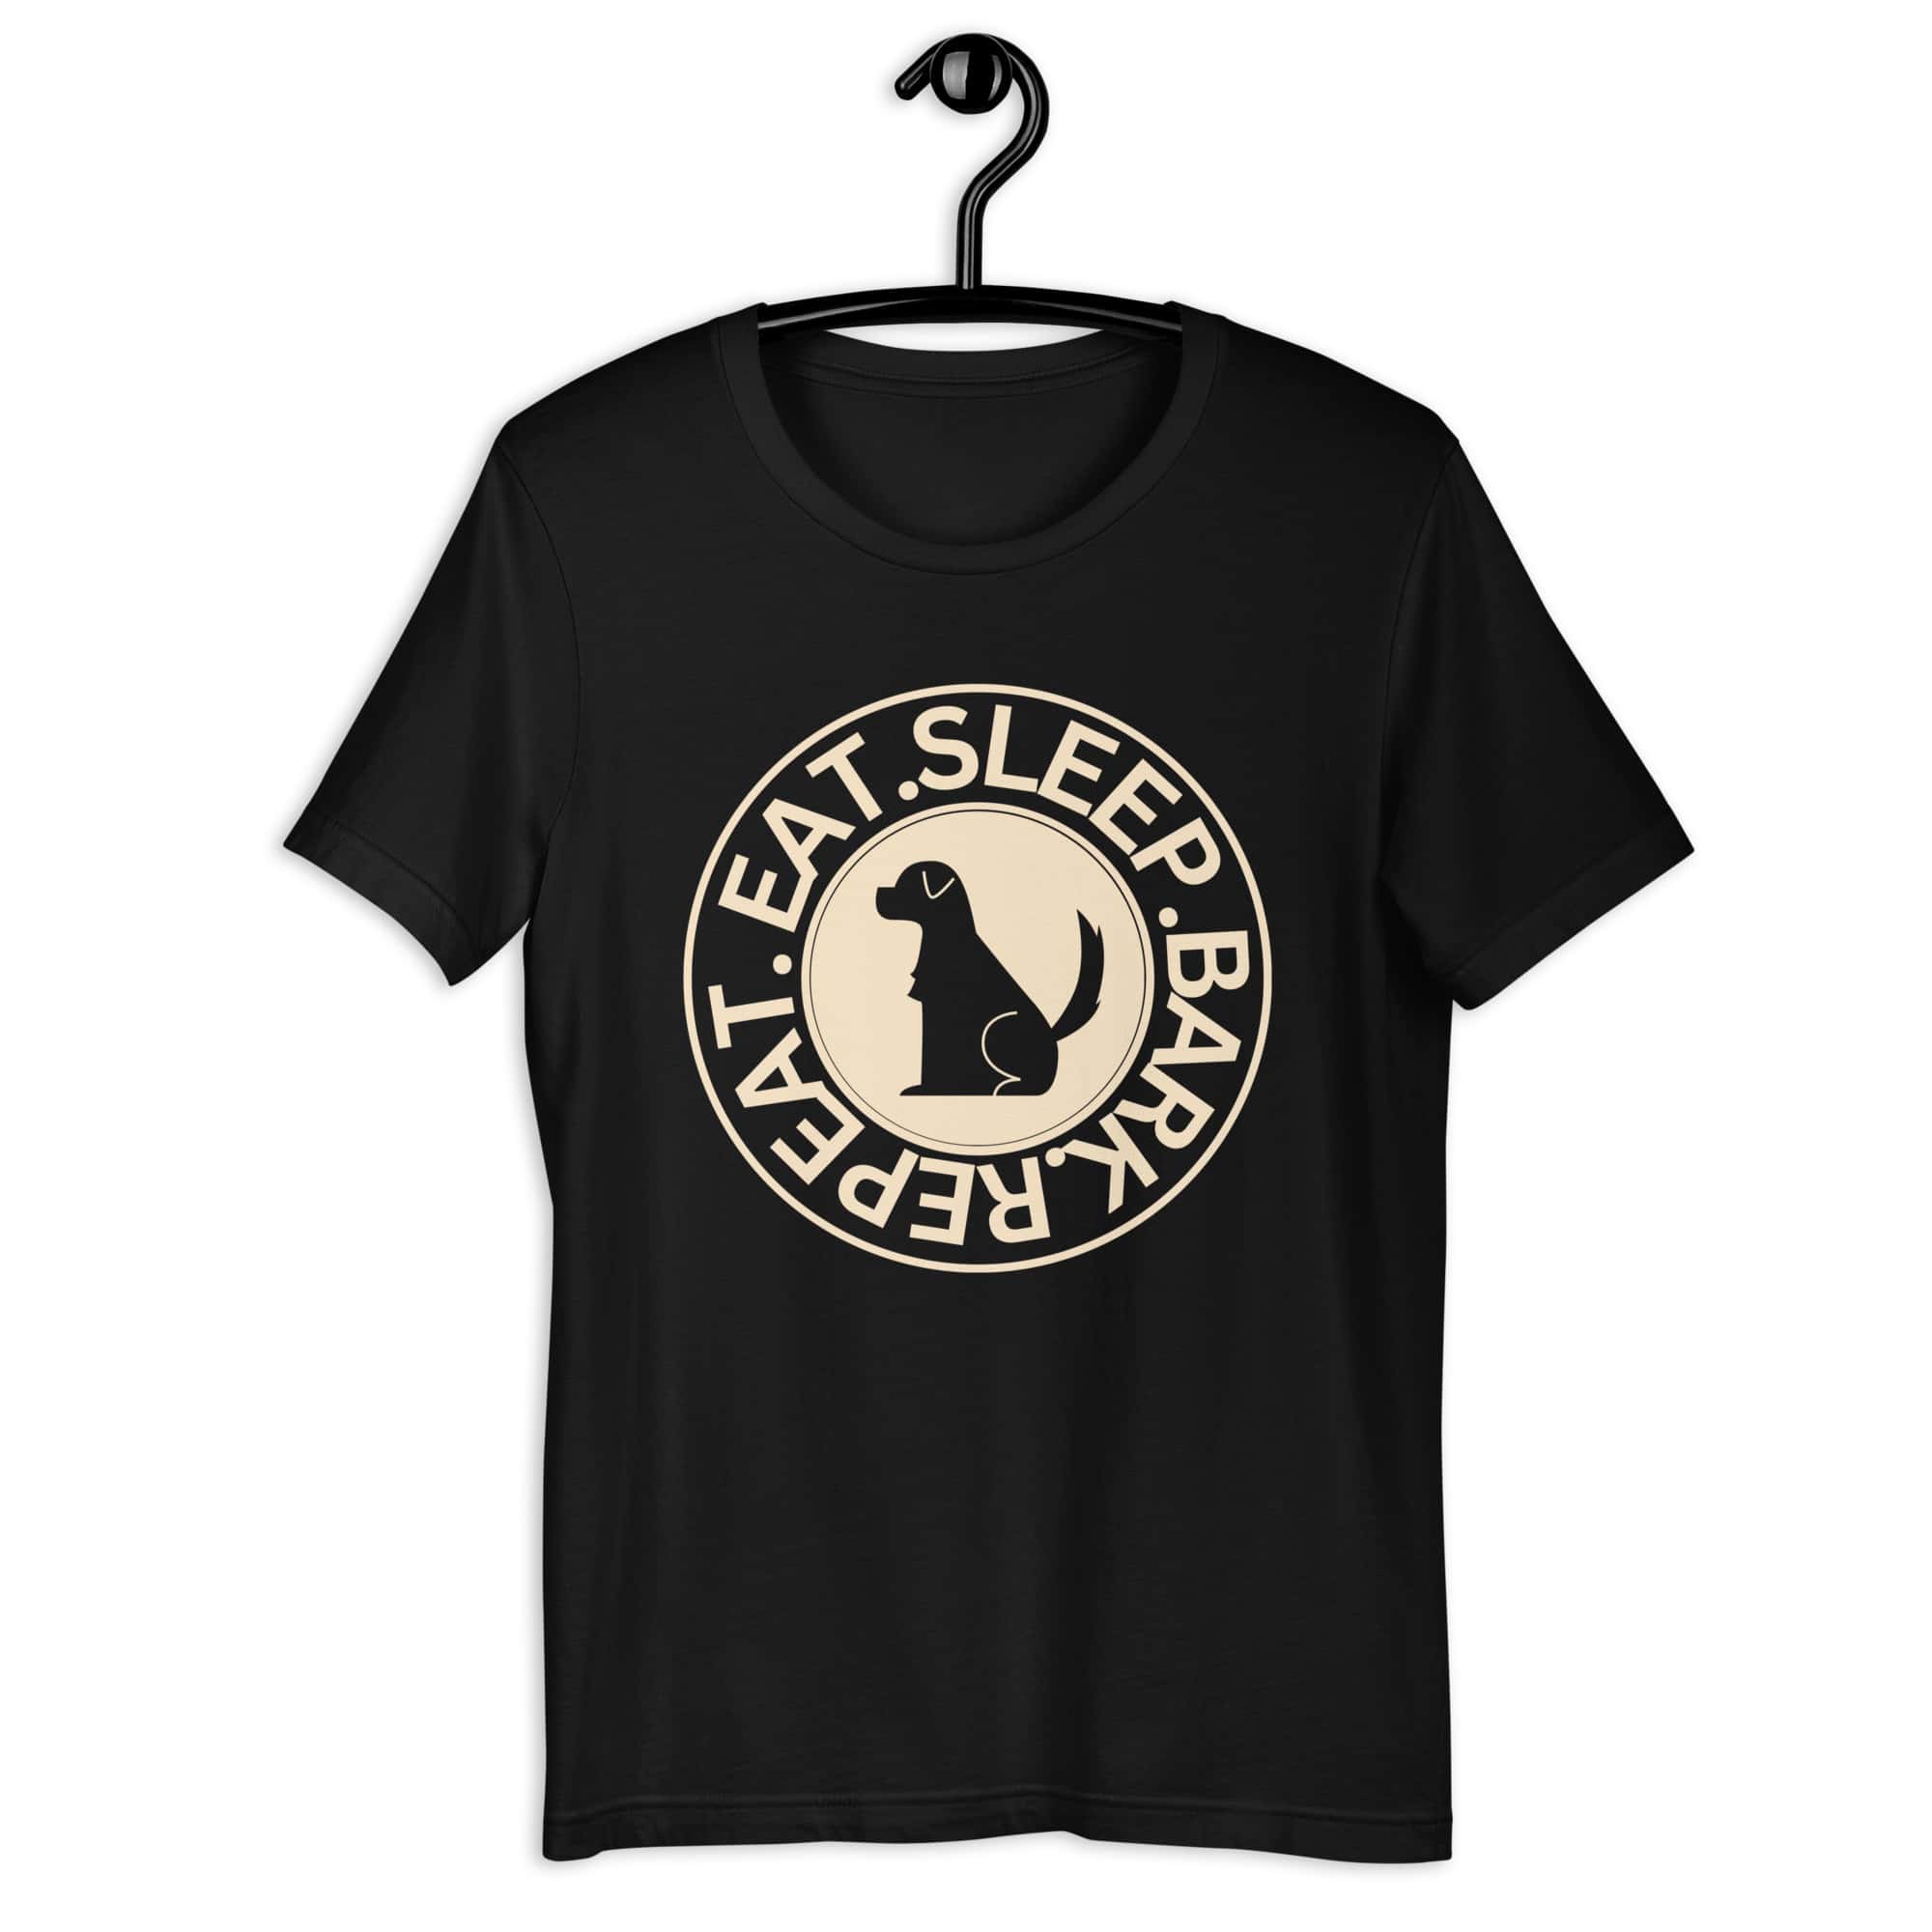 Eat Sleep Bark Repeat Ansylvanian Hound Unisex T-Shirt. Black